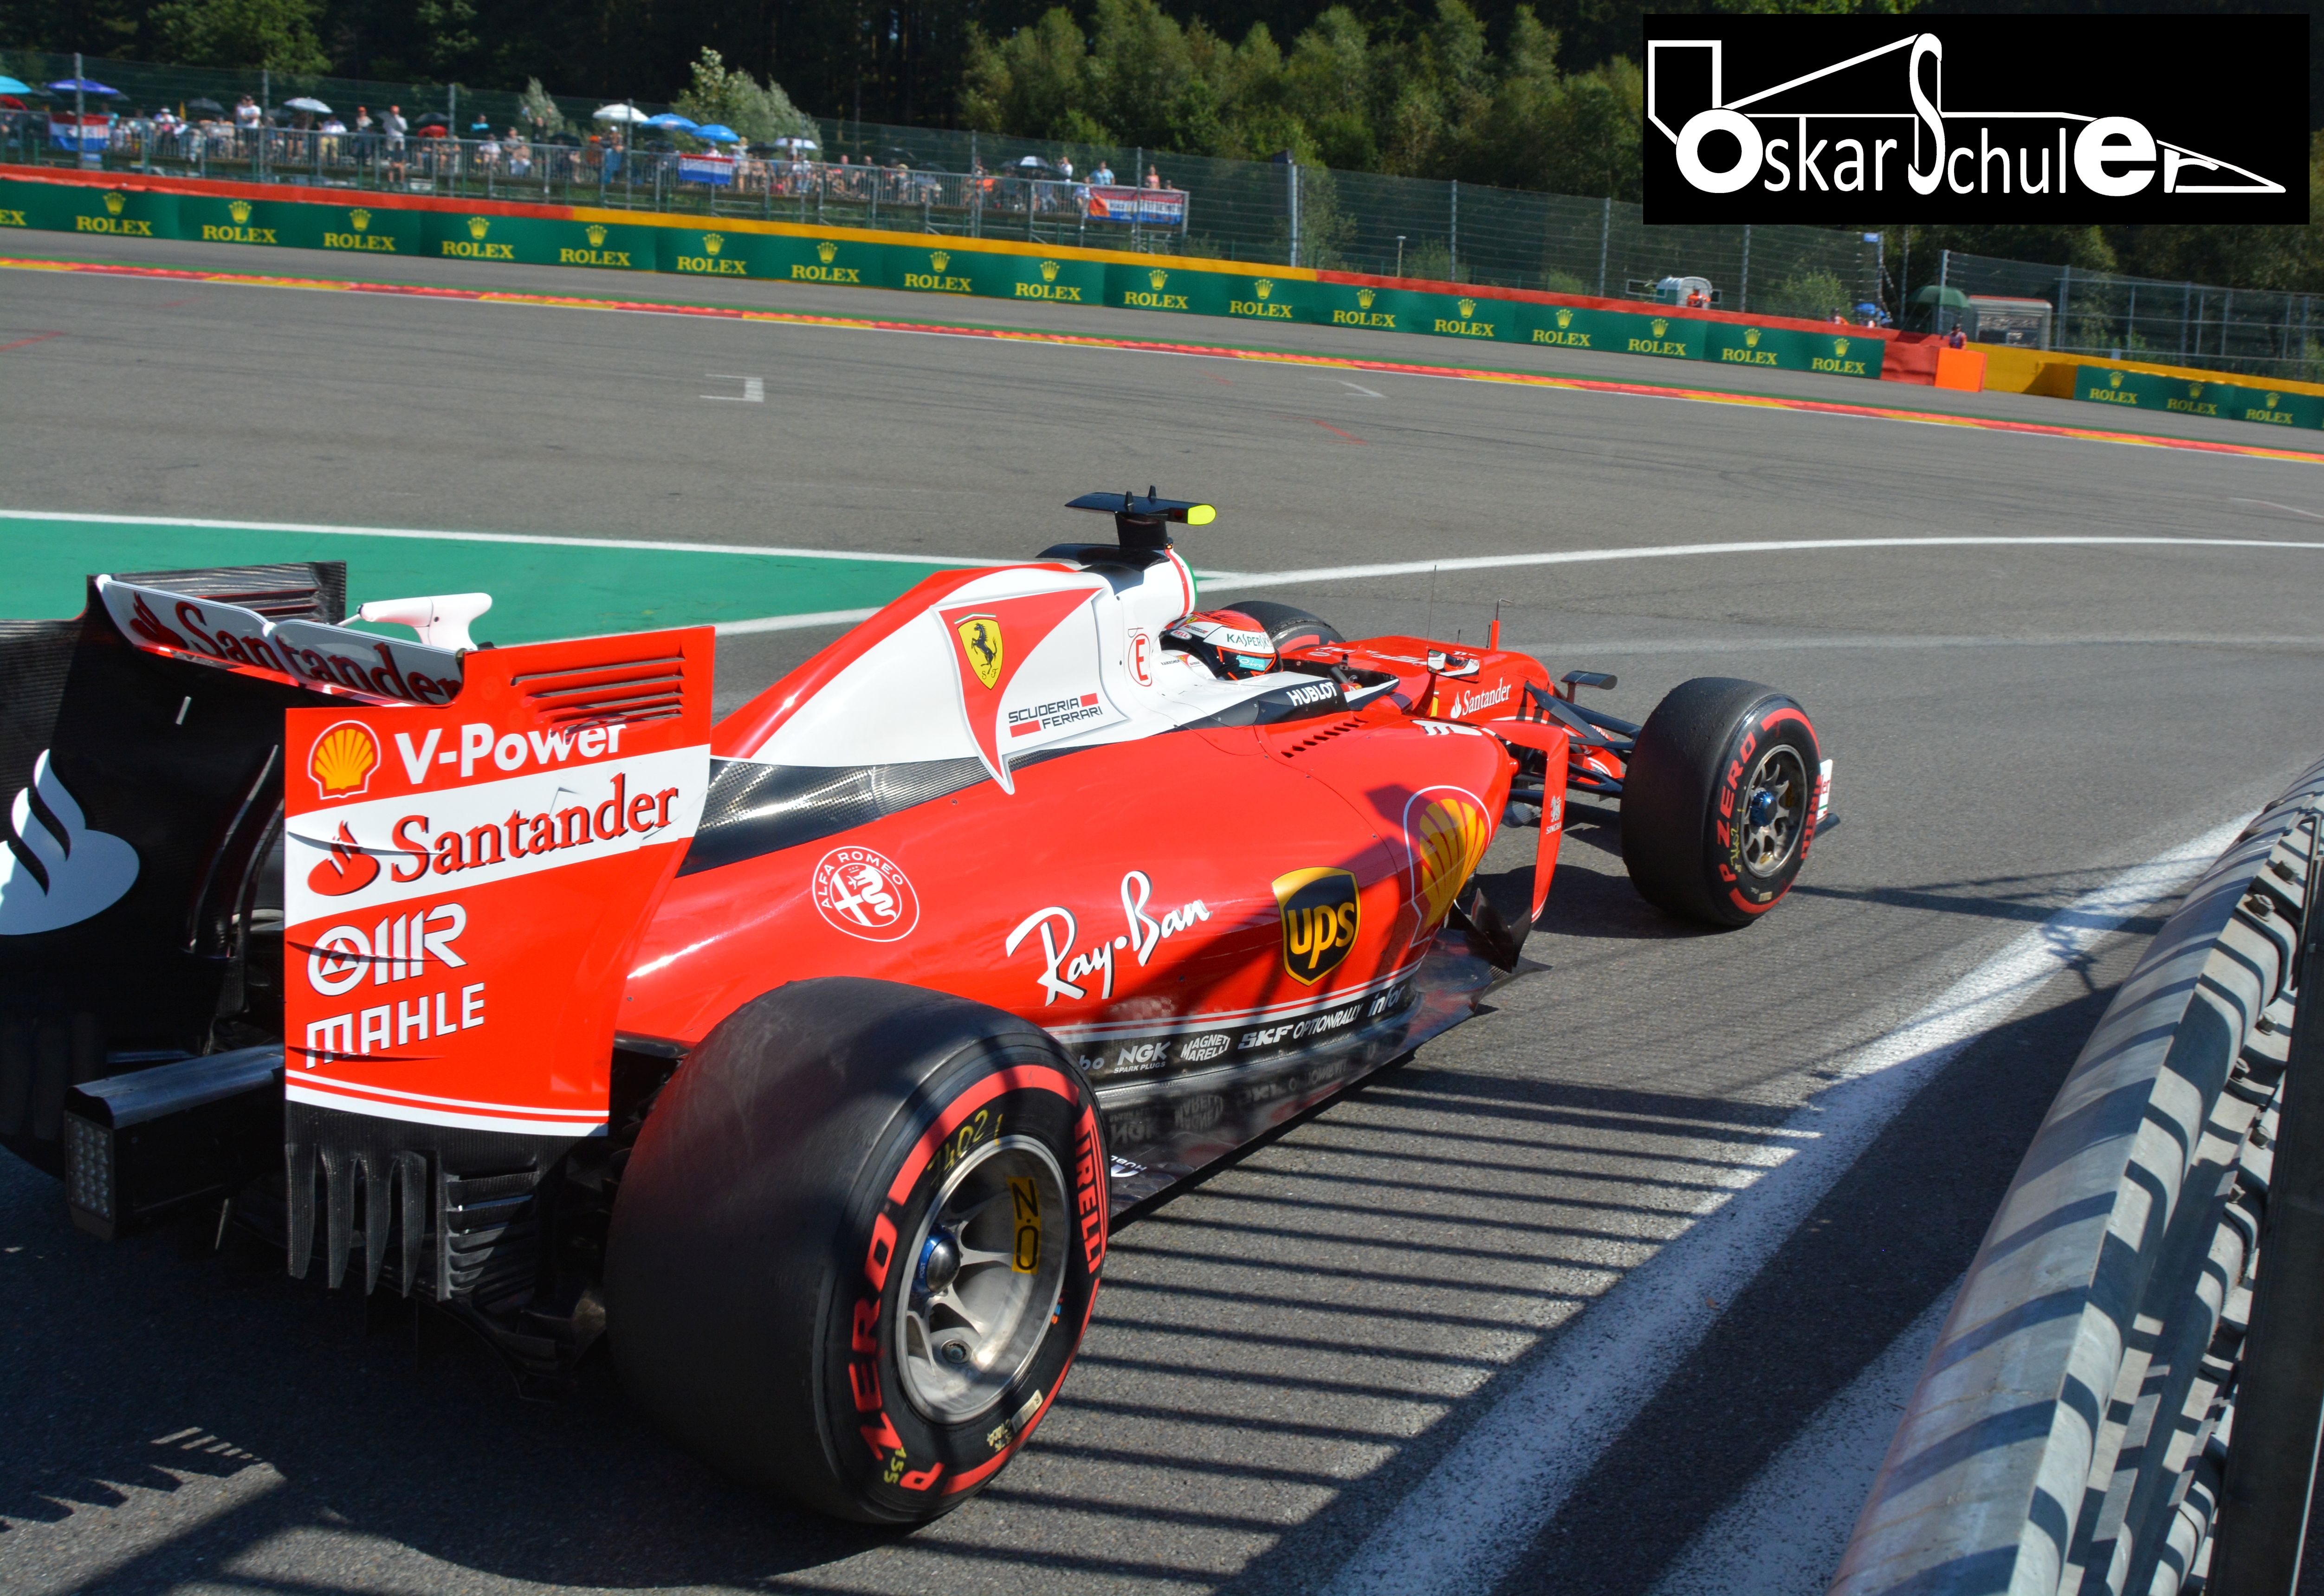 Photo of Kimi Raikkonen in the Ferrari at Spa-Francorchamps